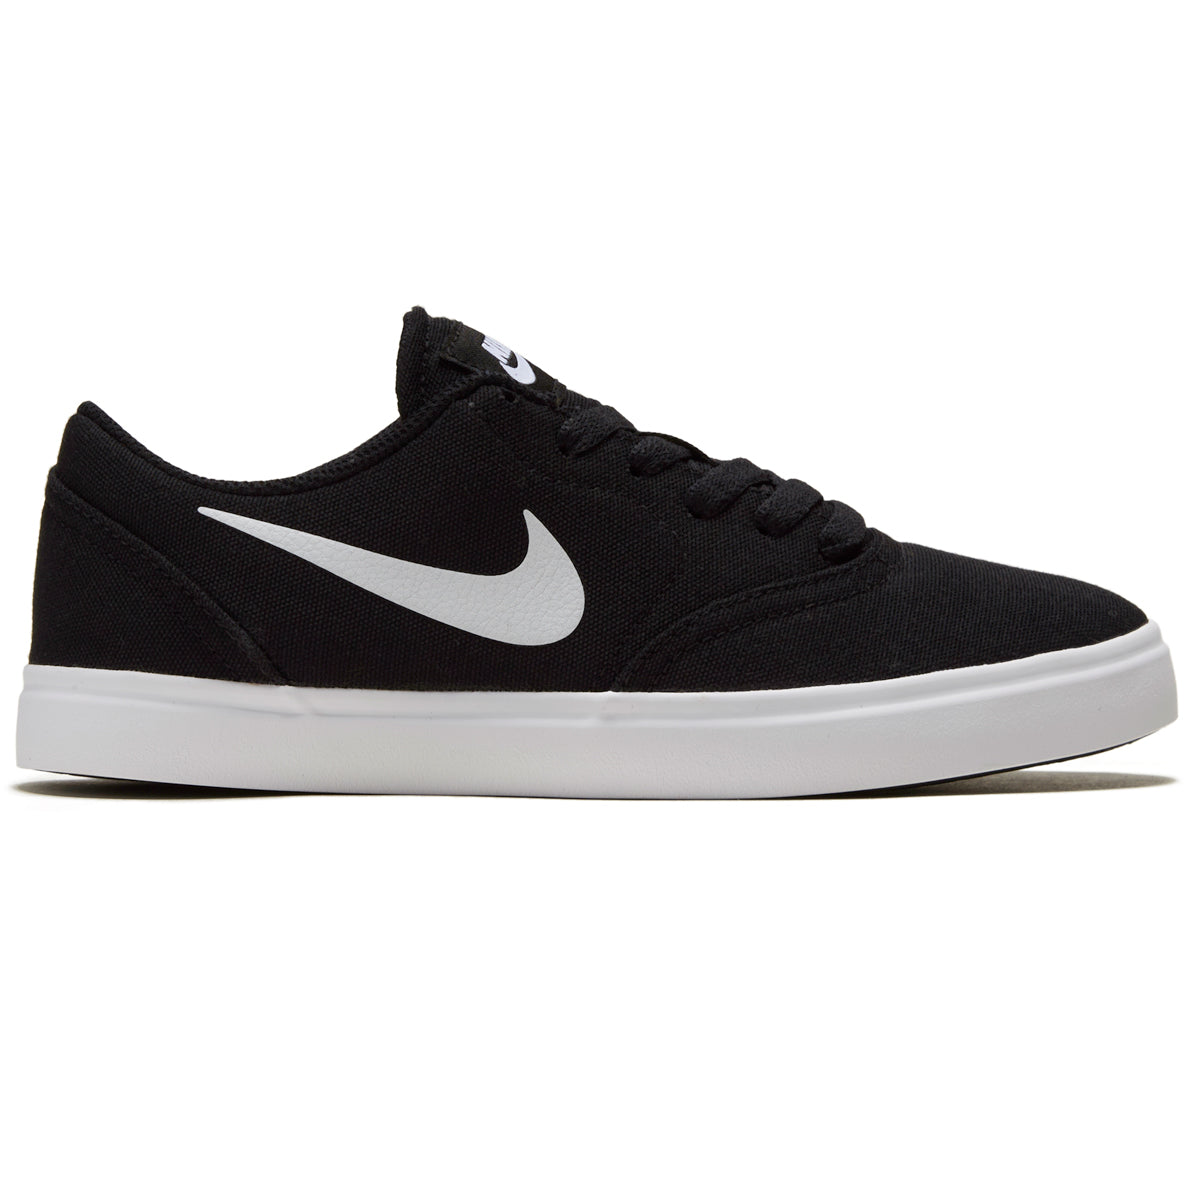 Nike SB Youth Check Canvas Shoes - Black/White image 1